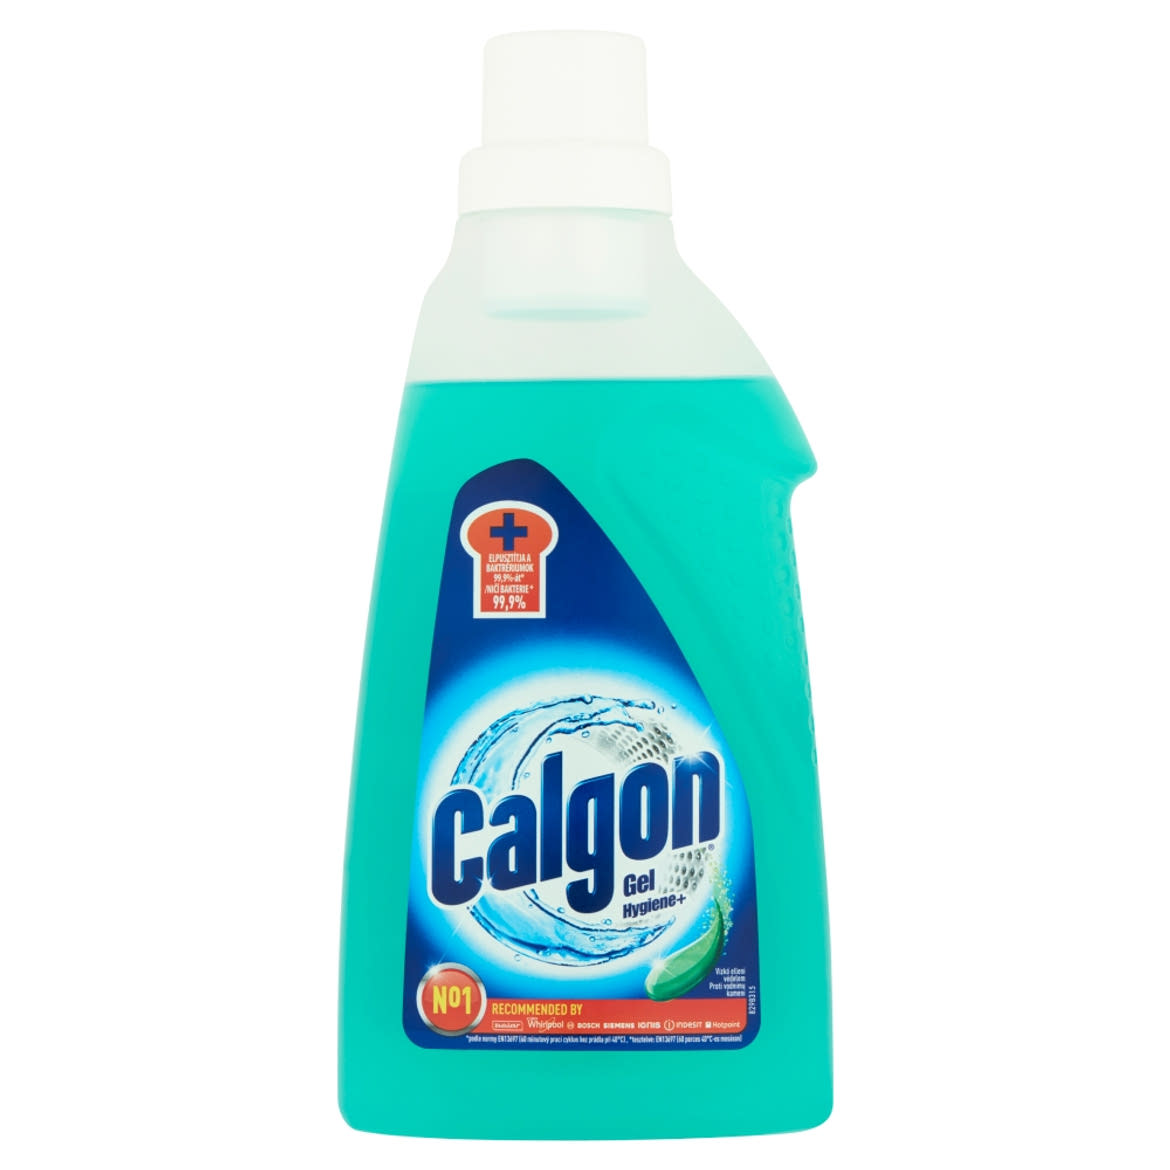 Calgon Hygiene+ gél